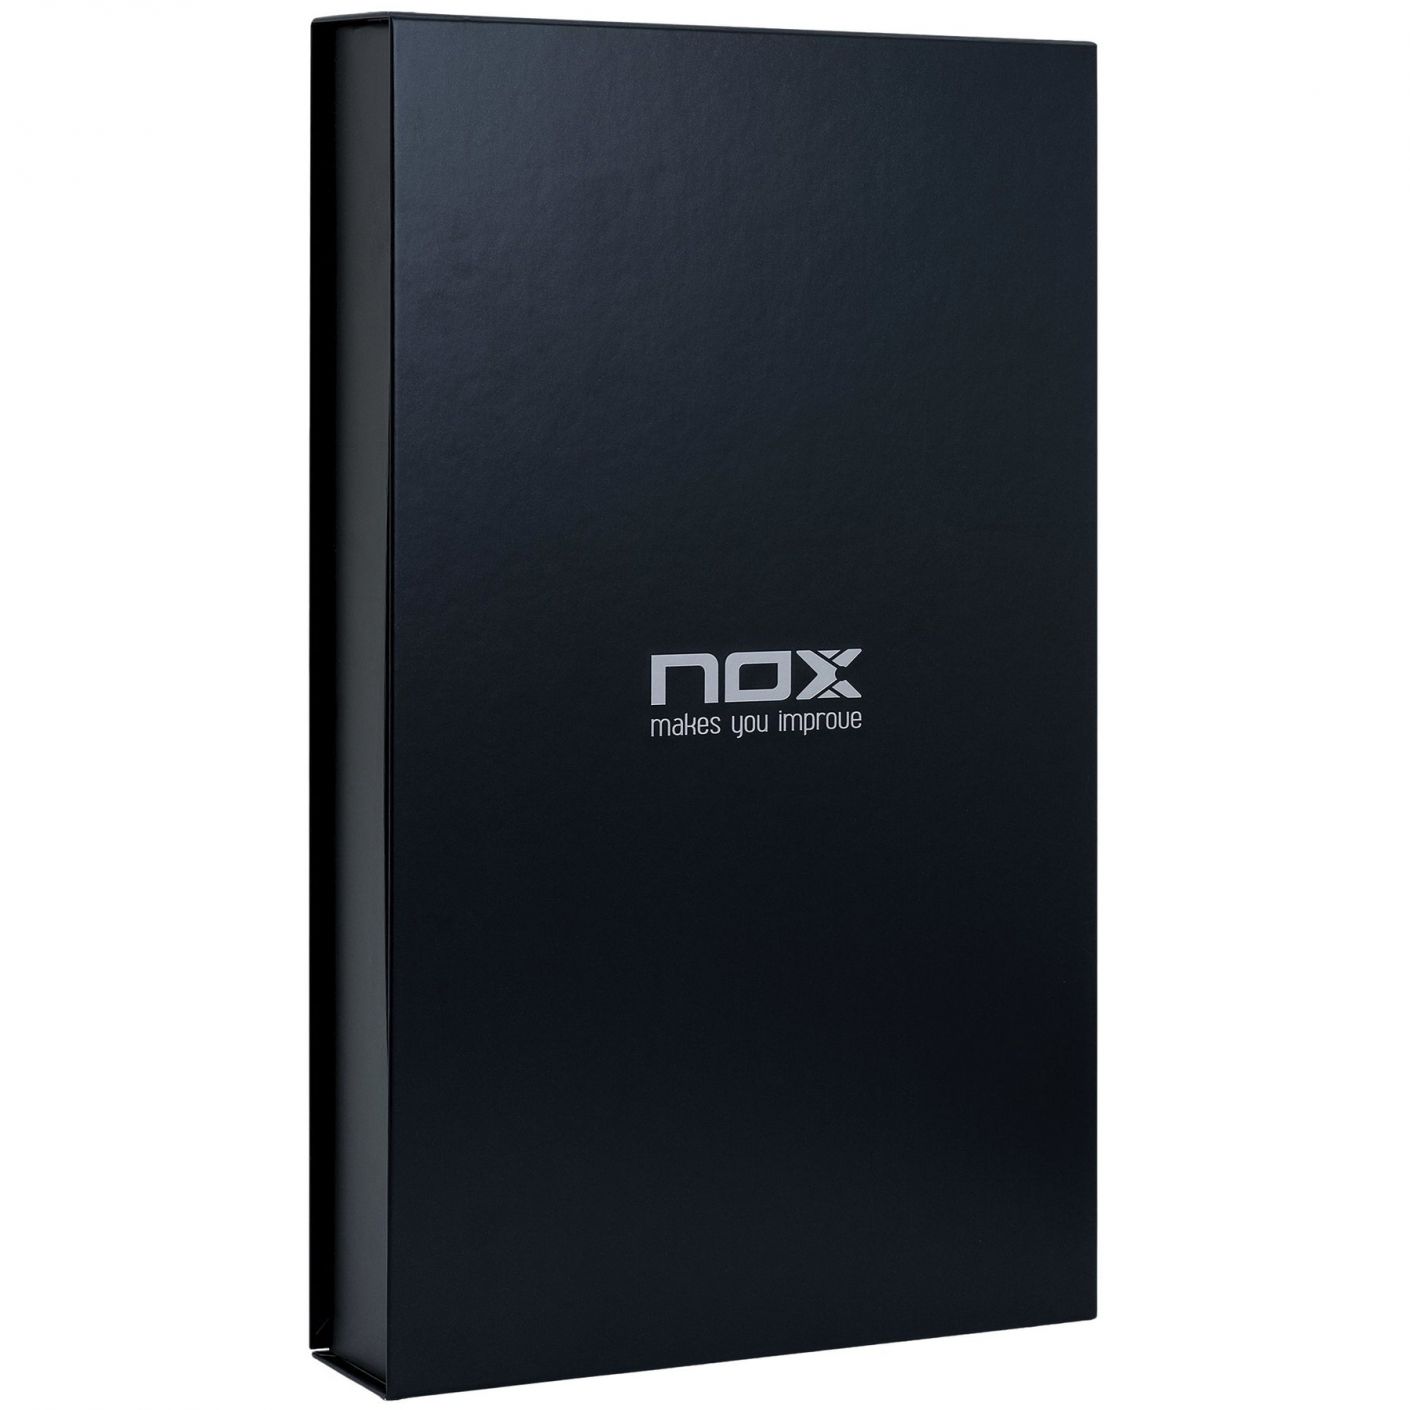 Nox AT2 LTD – AT10 Genius Pack Limited Edition 2022